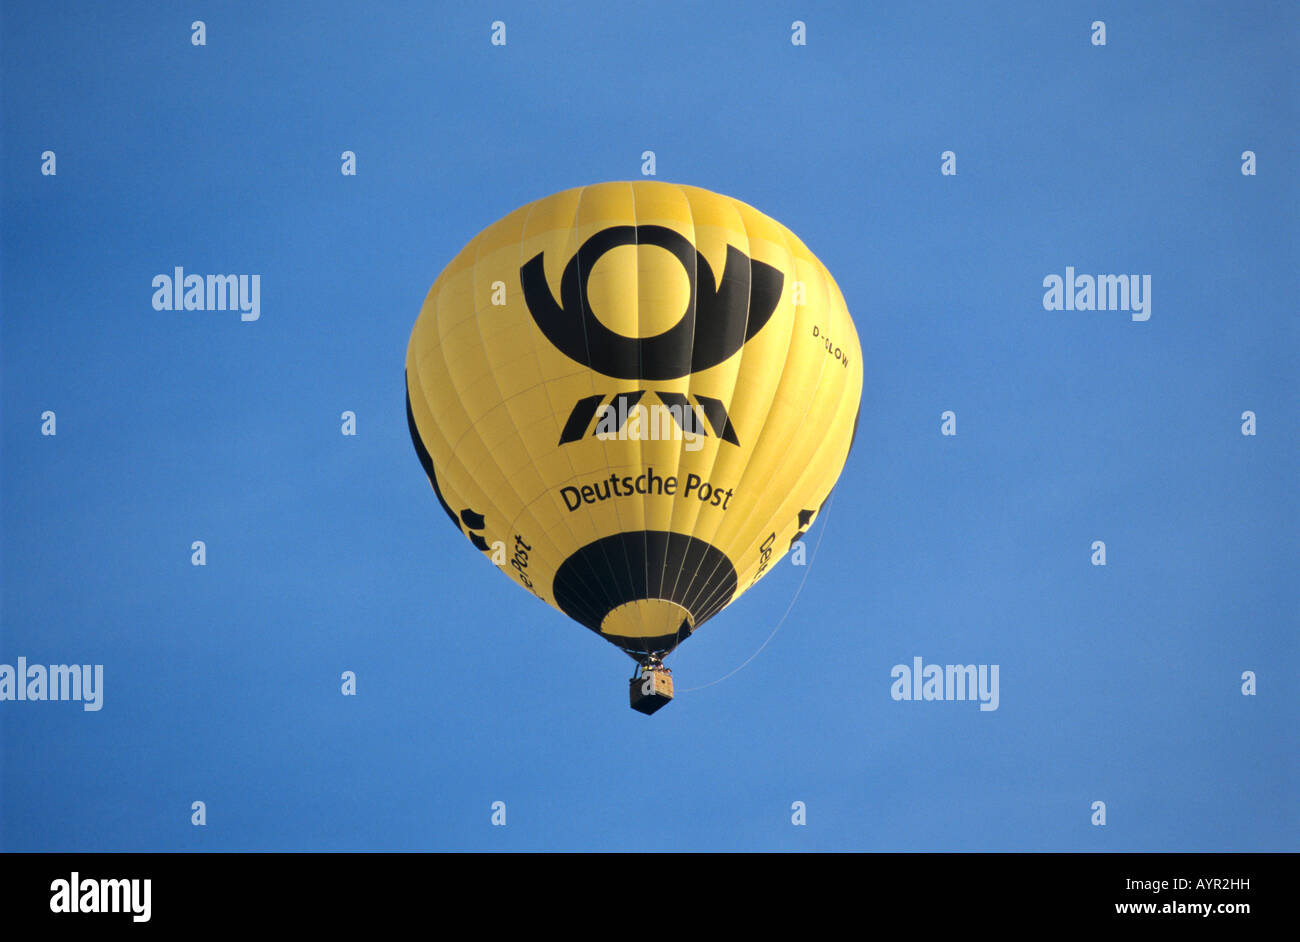 Deutsche Post (Poste allemande) hot air balloon in a blue sky Banque D'Images